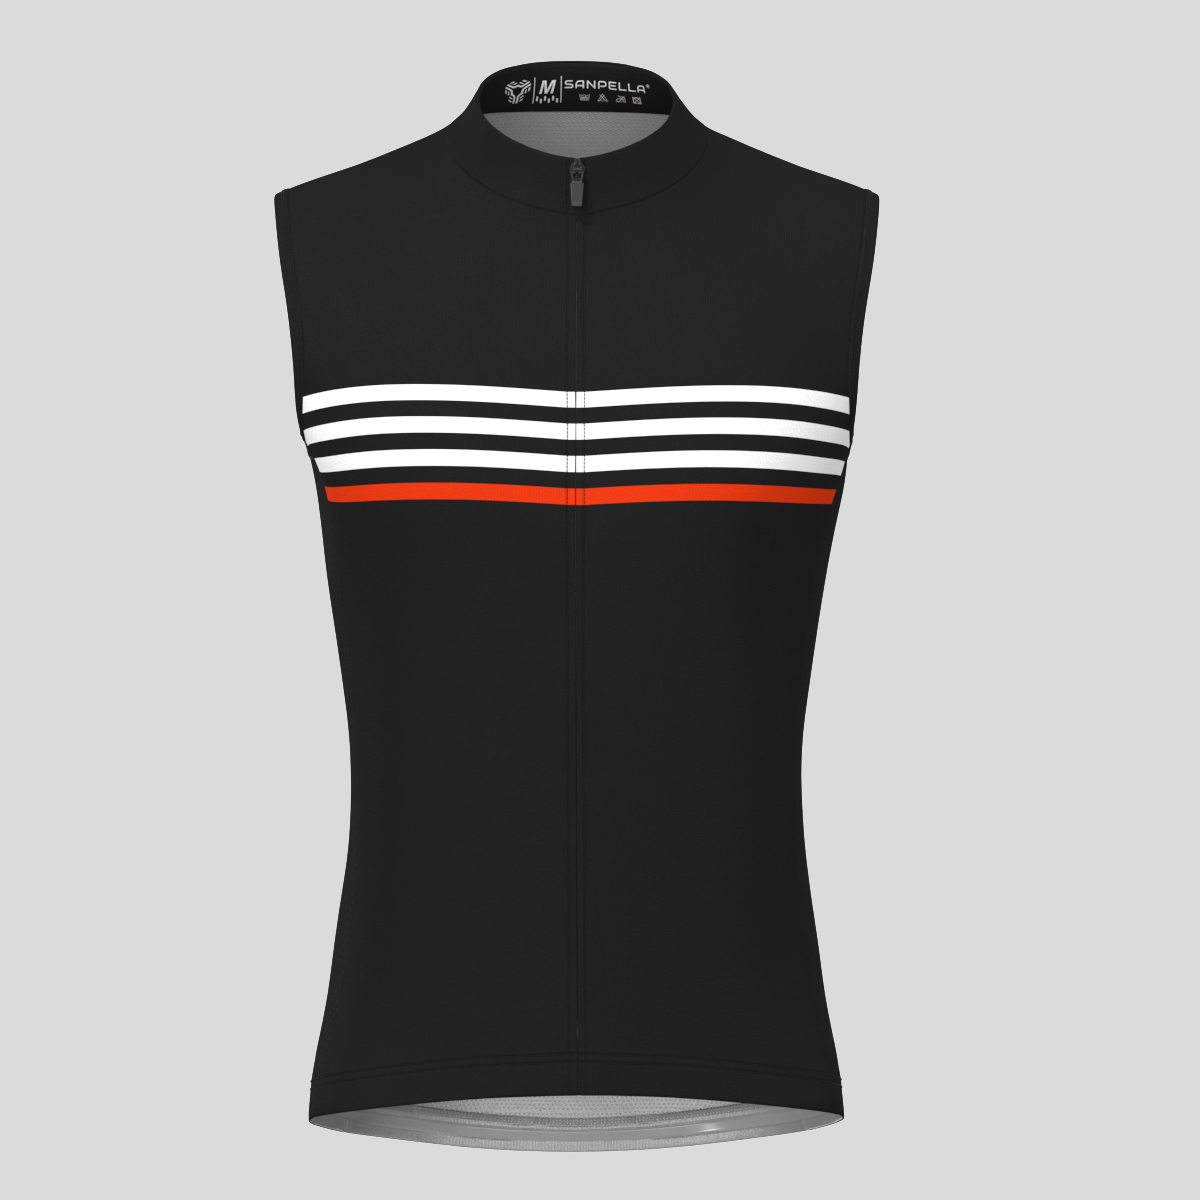 Minimal Stripes Men's Sleeveless Cycling Jersey - Black/White/Red